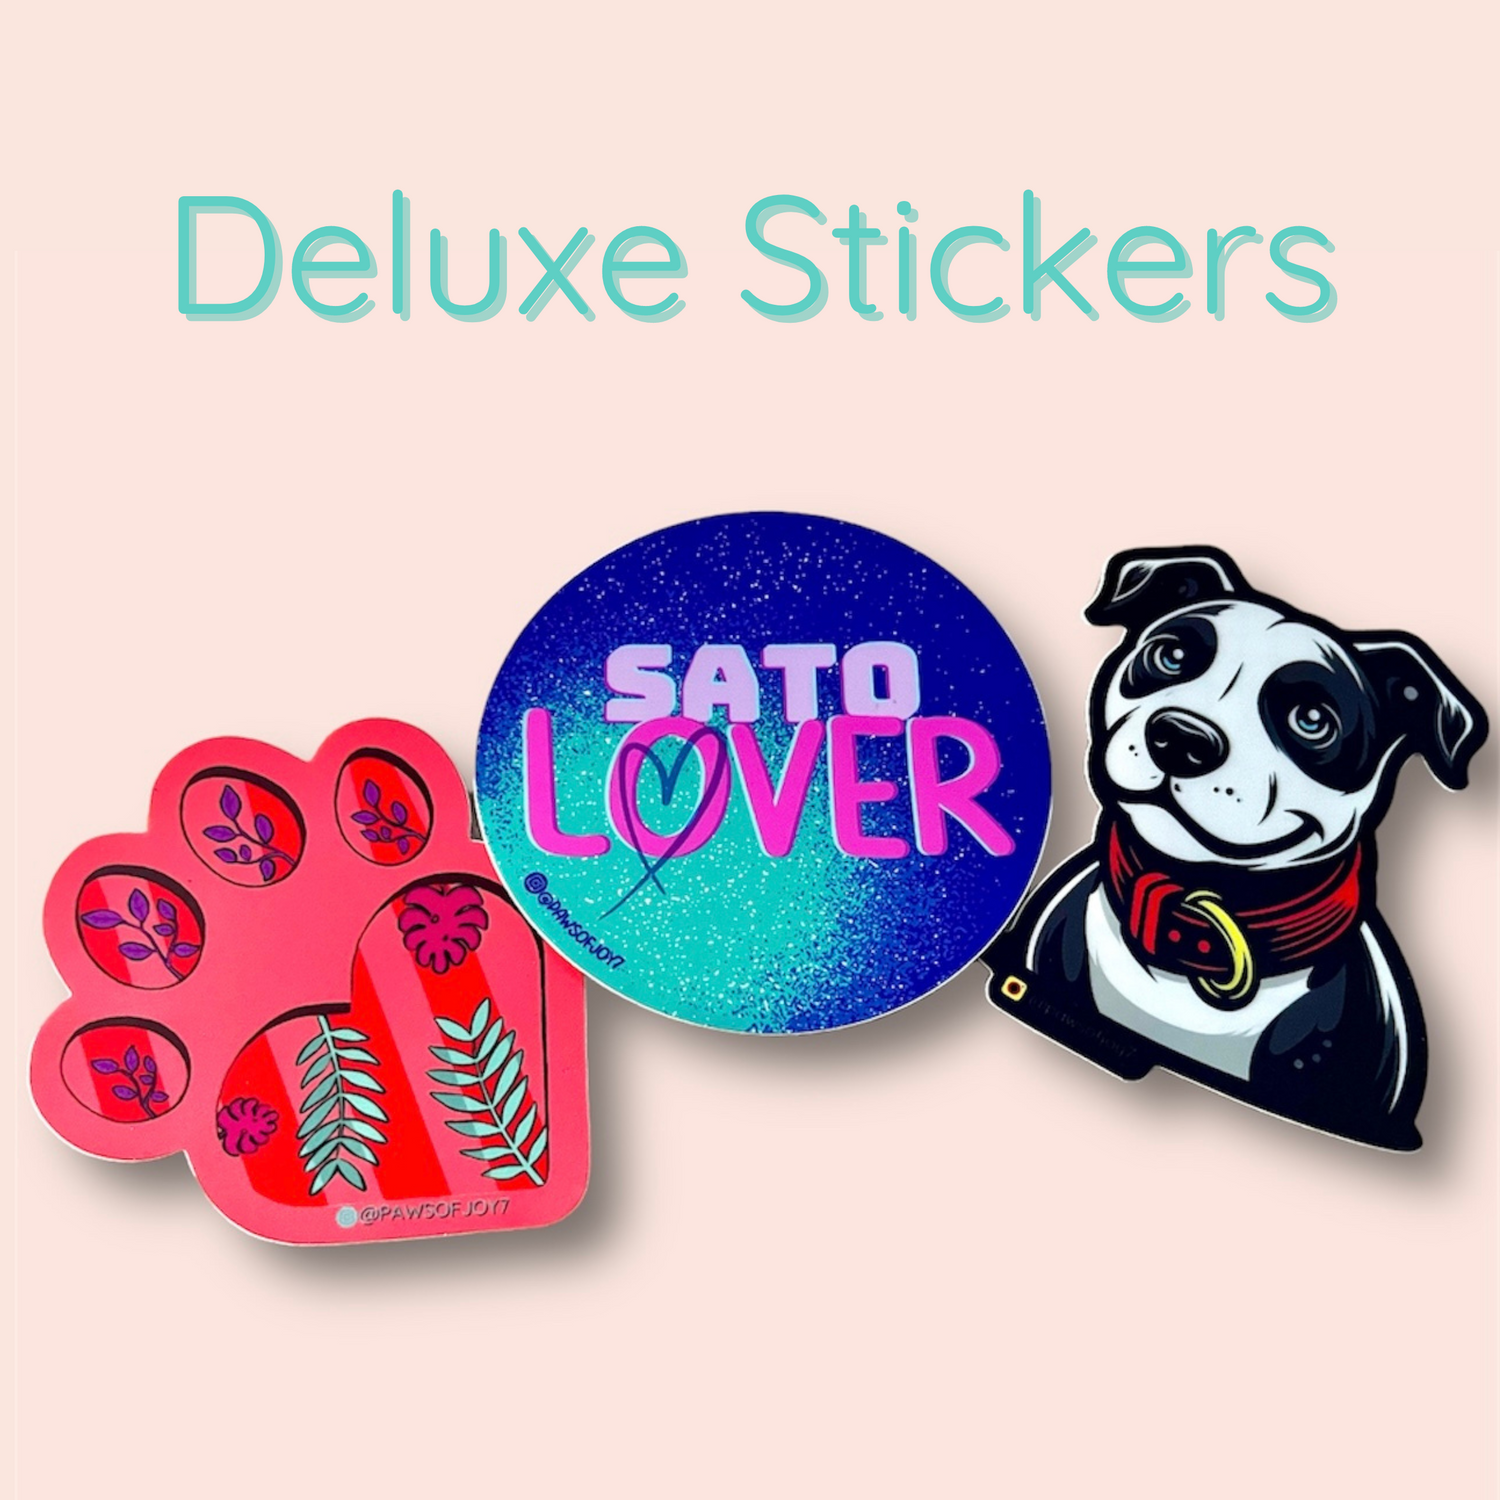 Deluxe Stickers